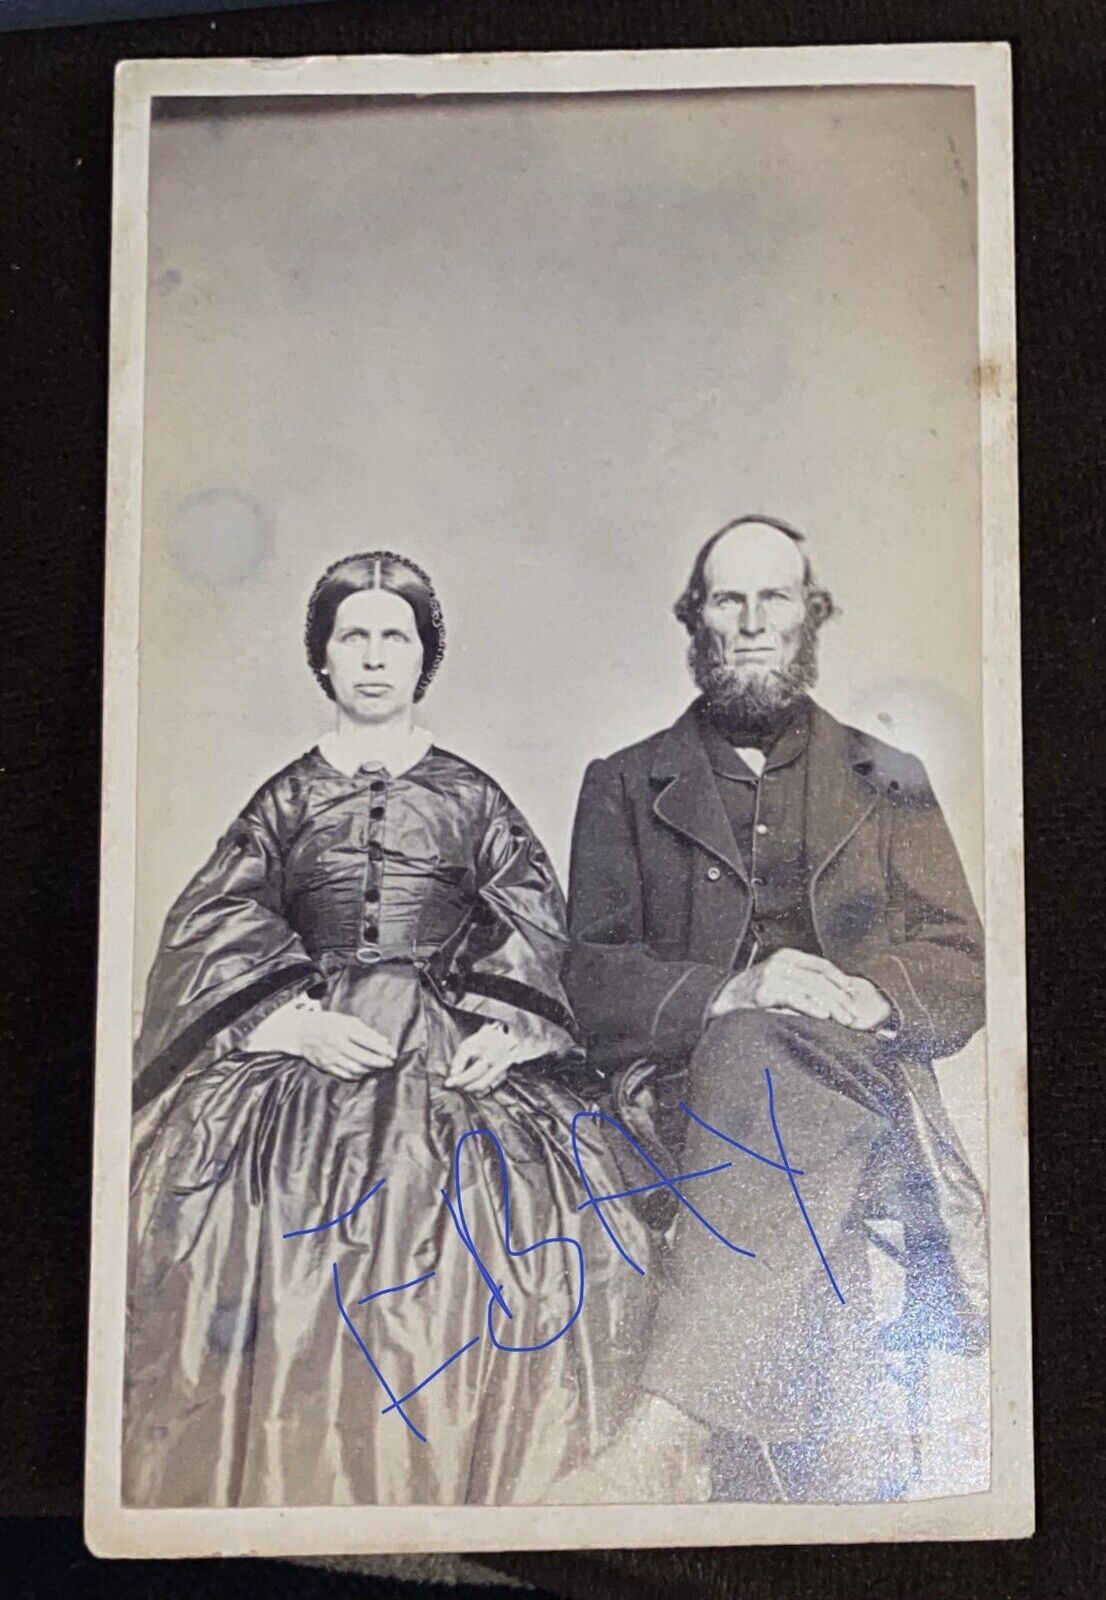 Vintage 1860s CDV Photo -Seated Couple -D. SMITH -ATHOL DEPOT, MA + TAX STAMP